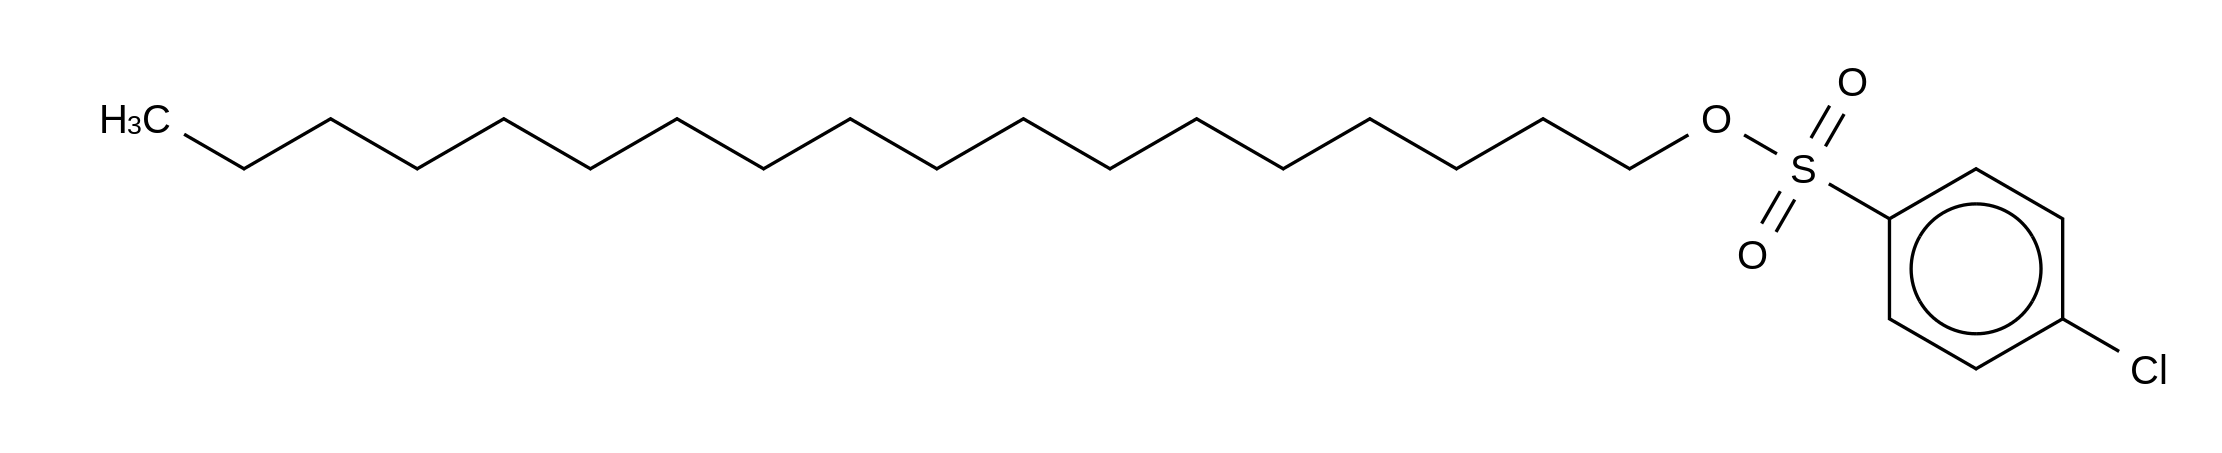 Octadecyl 4-Chlorobenzenesulfonate